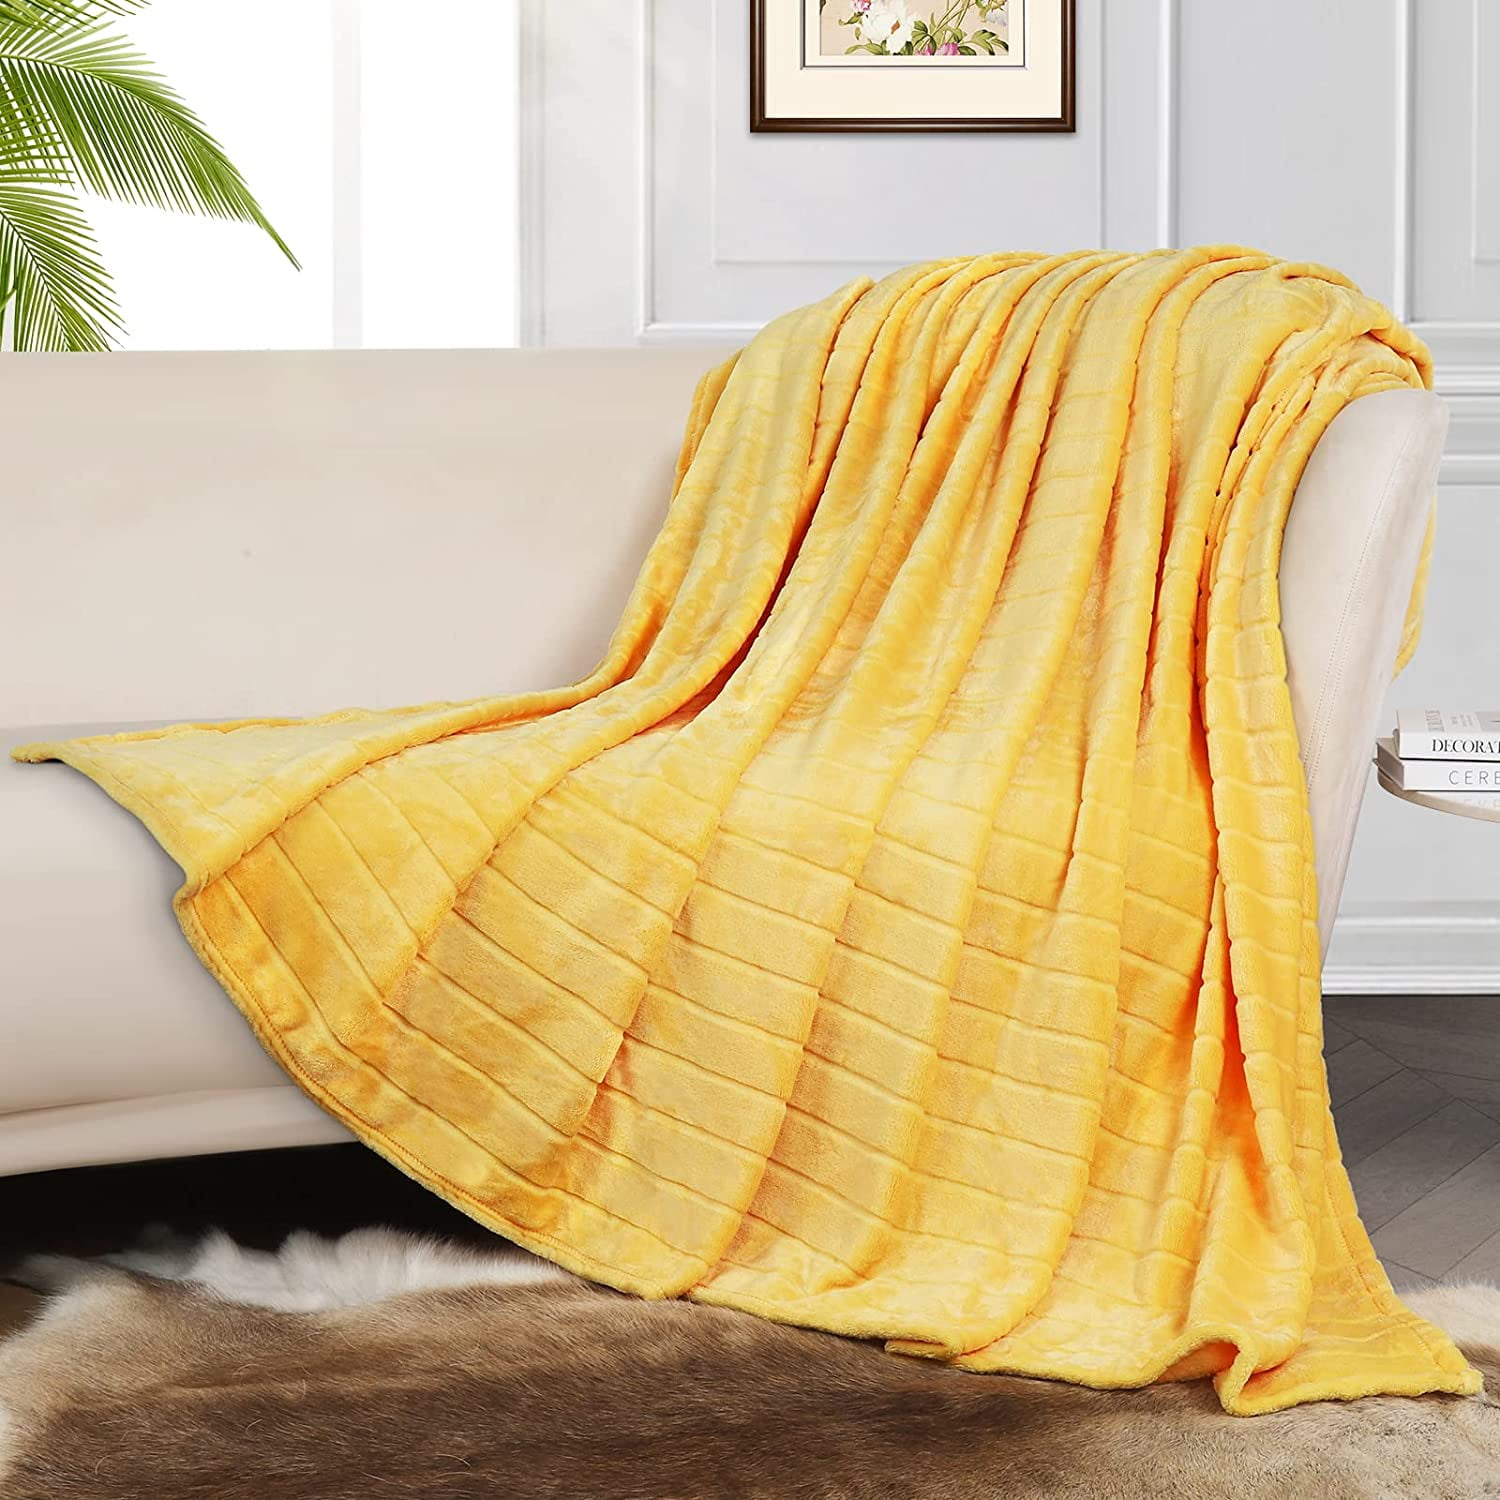 Bertte Throw Super Soft Cozy Warm 330 GSM Lightweight Luxury Fleece Blanket for 